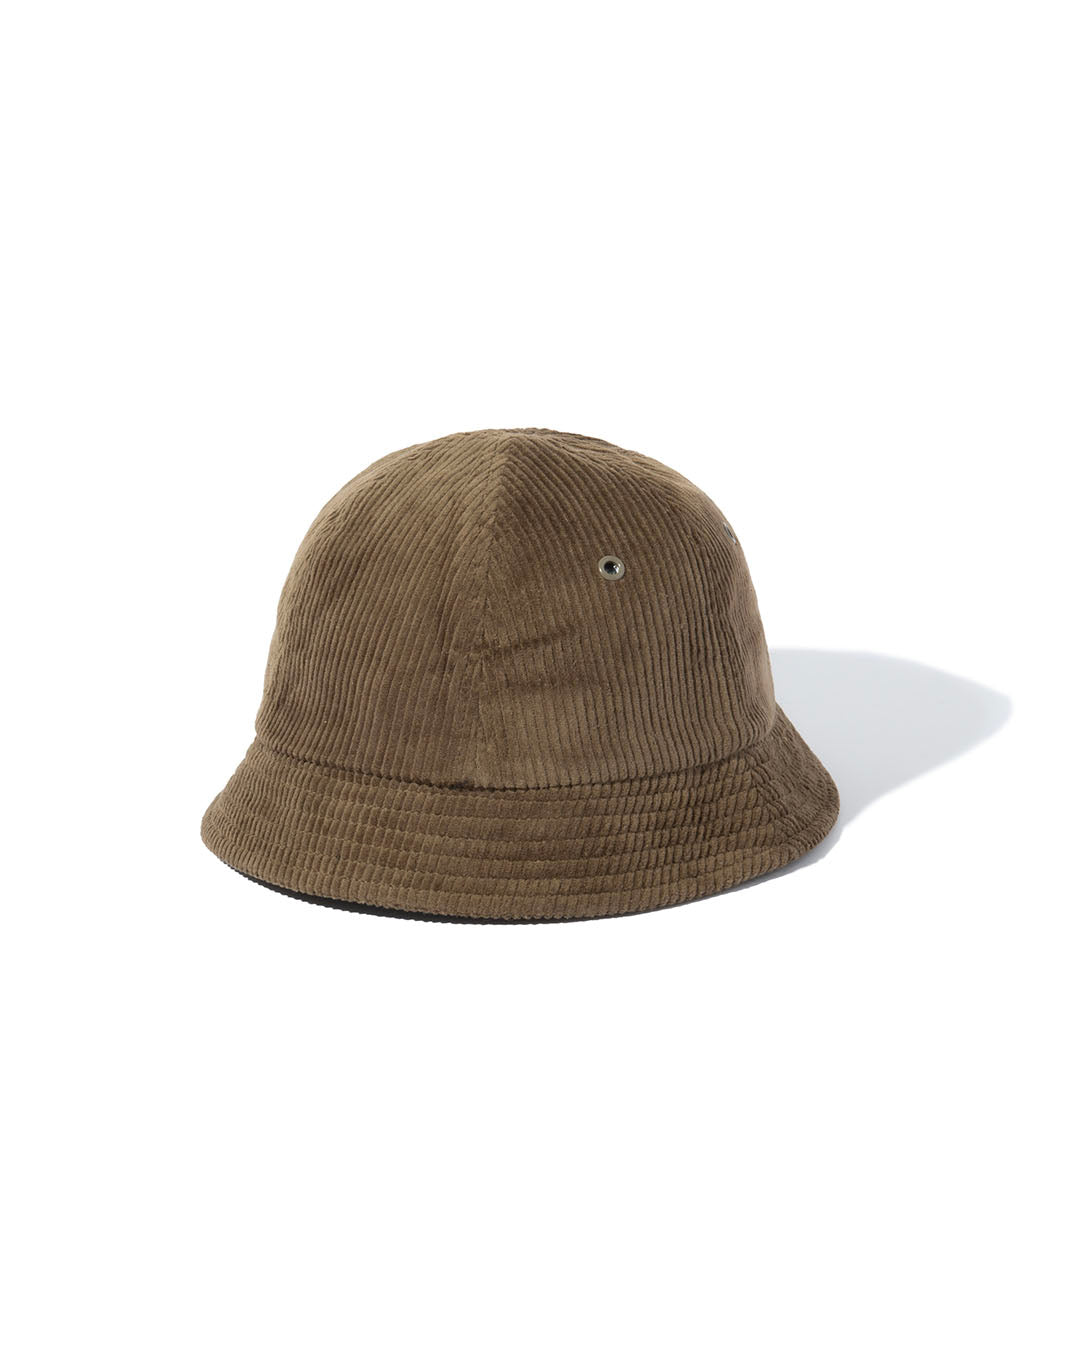 【ACY】CORDUROY HAT- BROWN